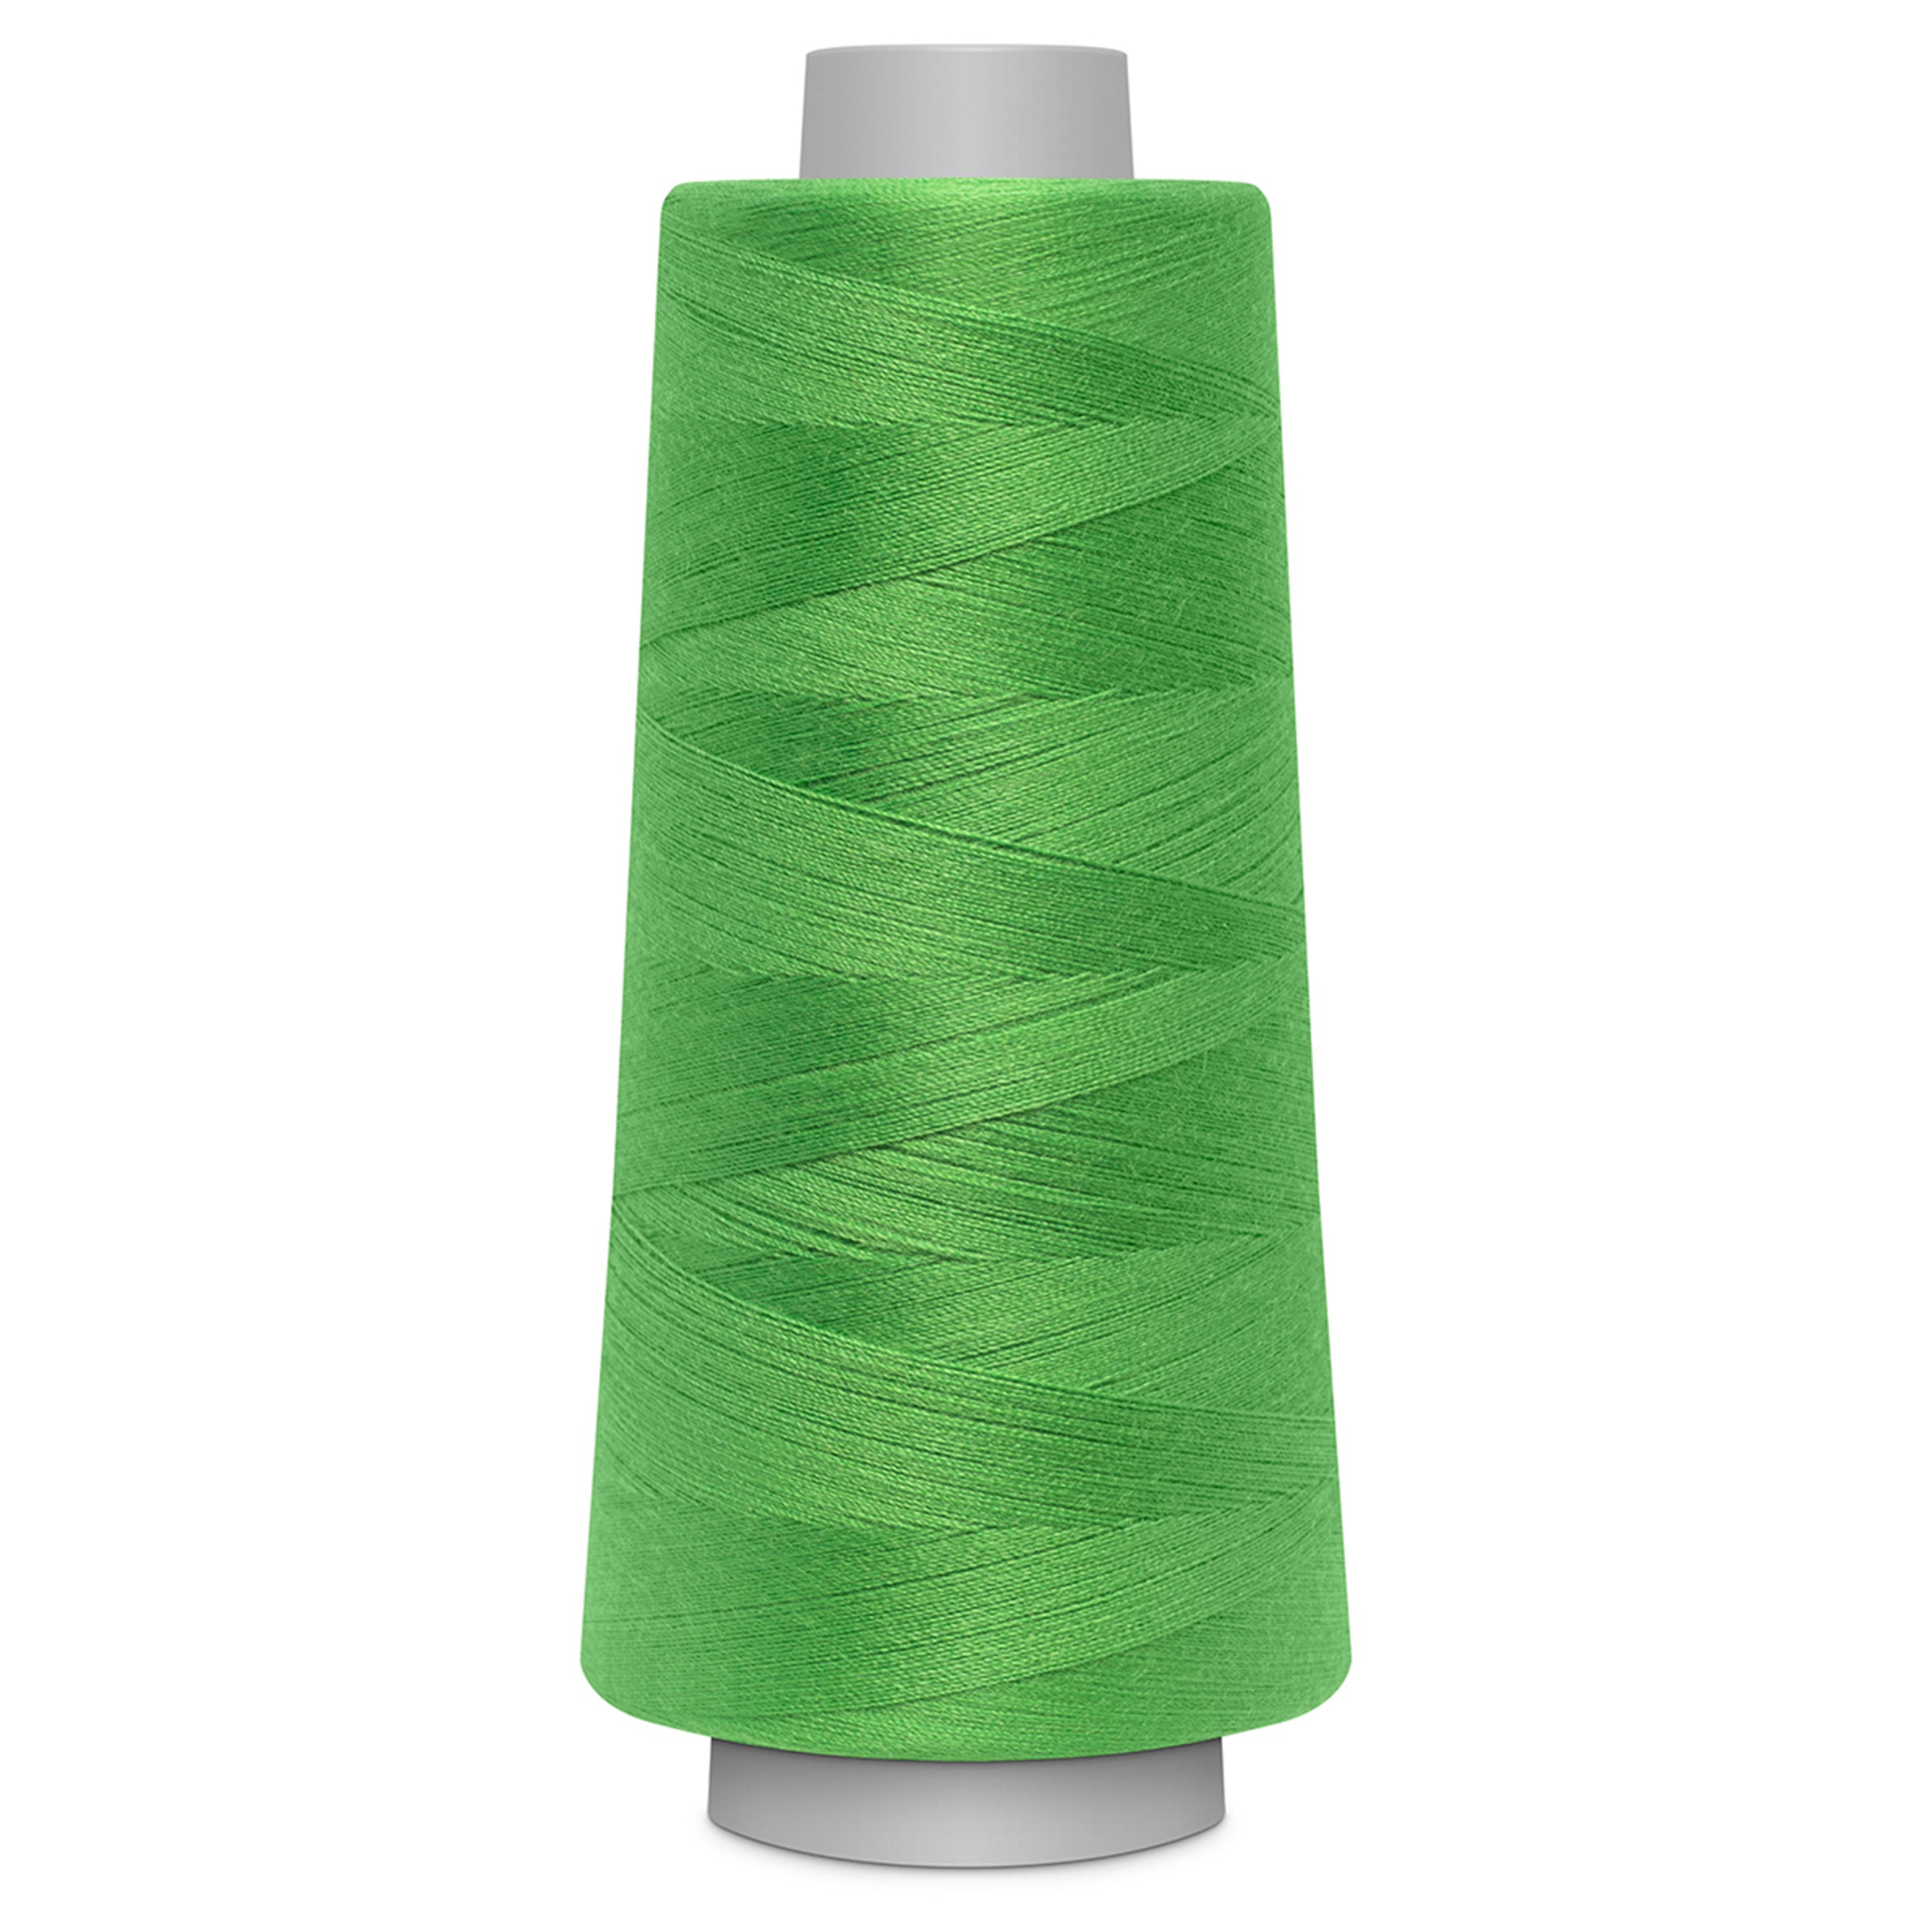 Gutermann TOLDI-LOCK Overlock Thread 2500m | Bright Green from Jaycotts Sewing Supplies